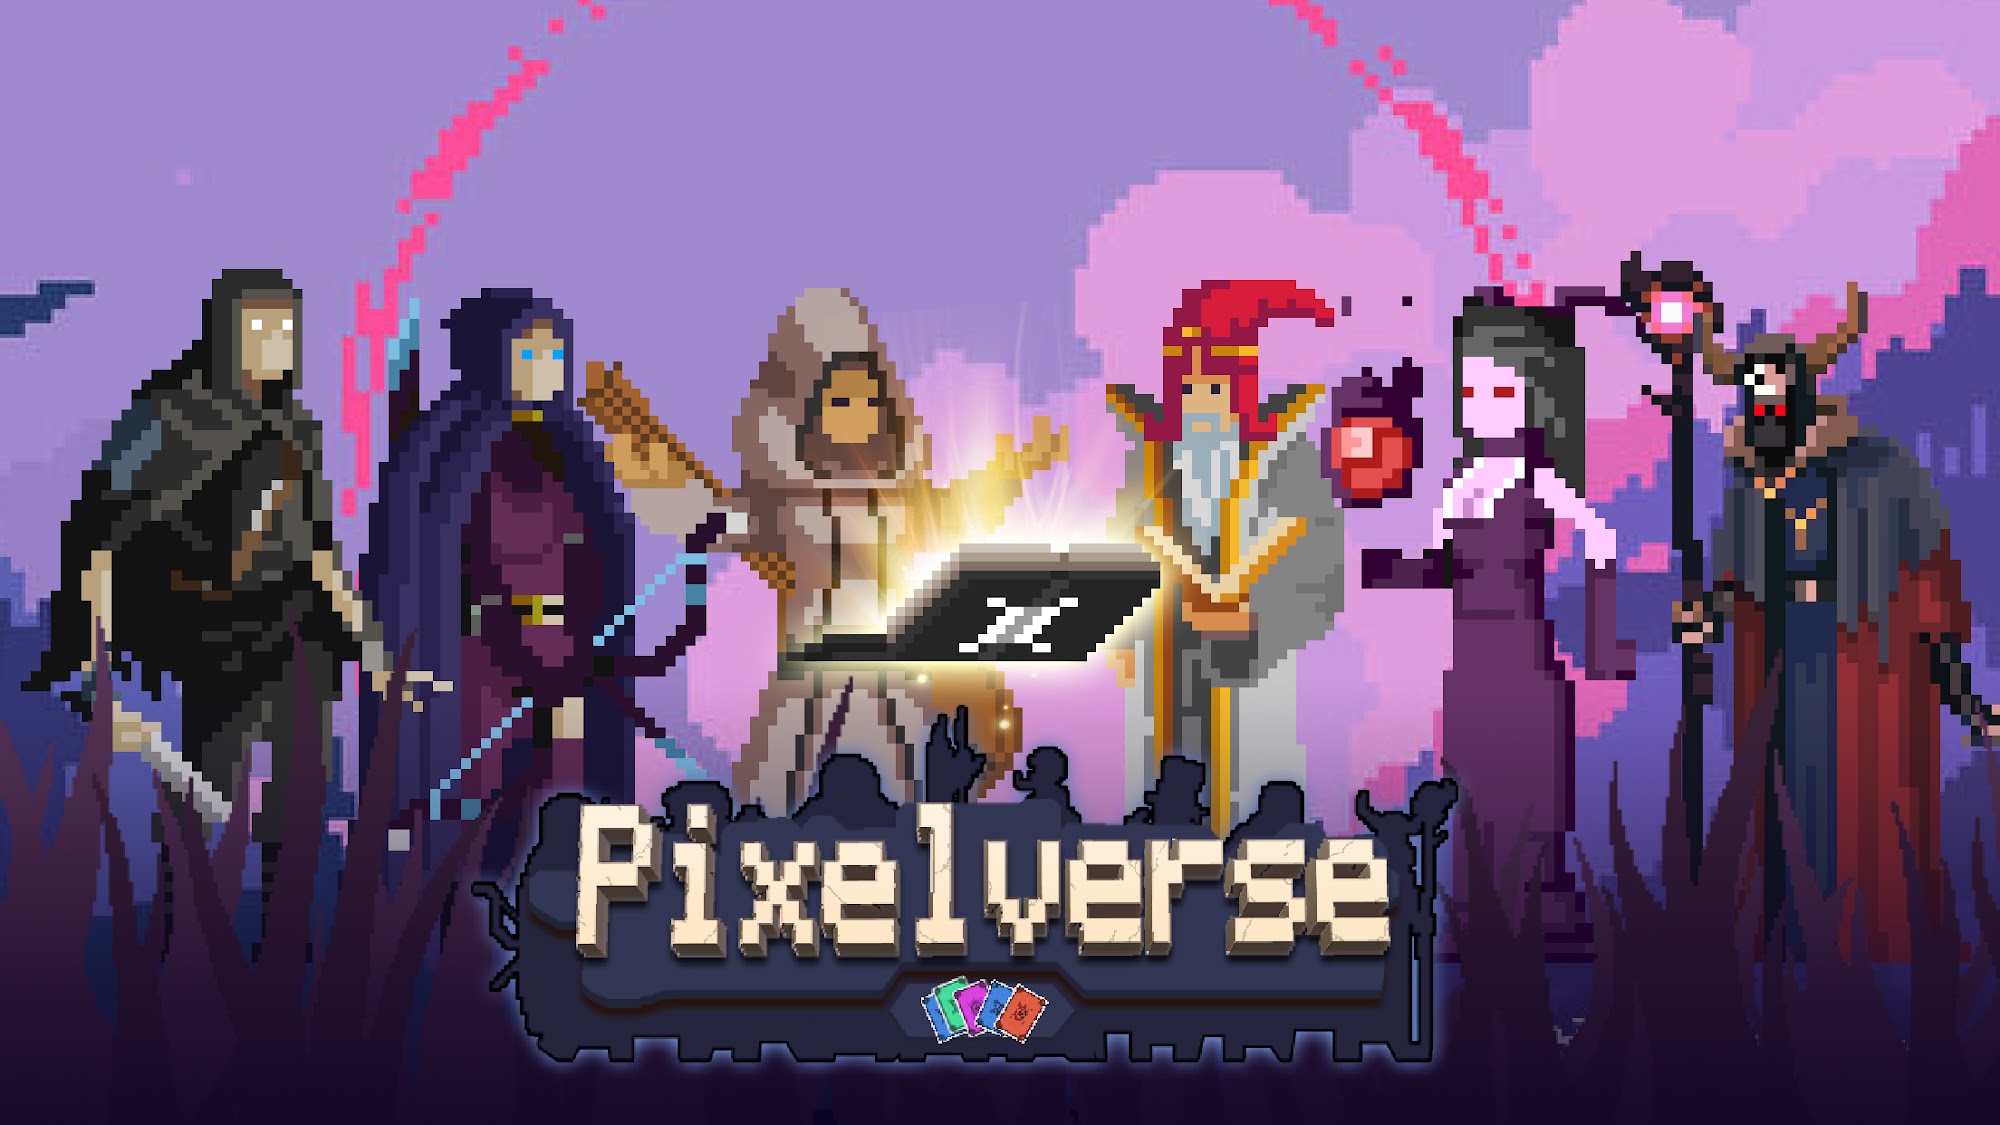 Descargar Pixelverse - Deck Heroes gratis para Android.